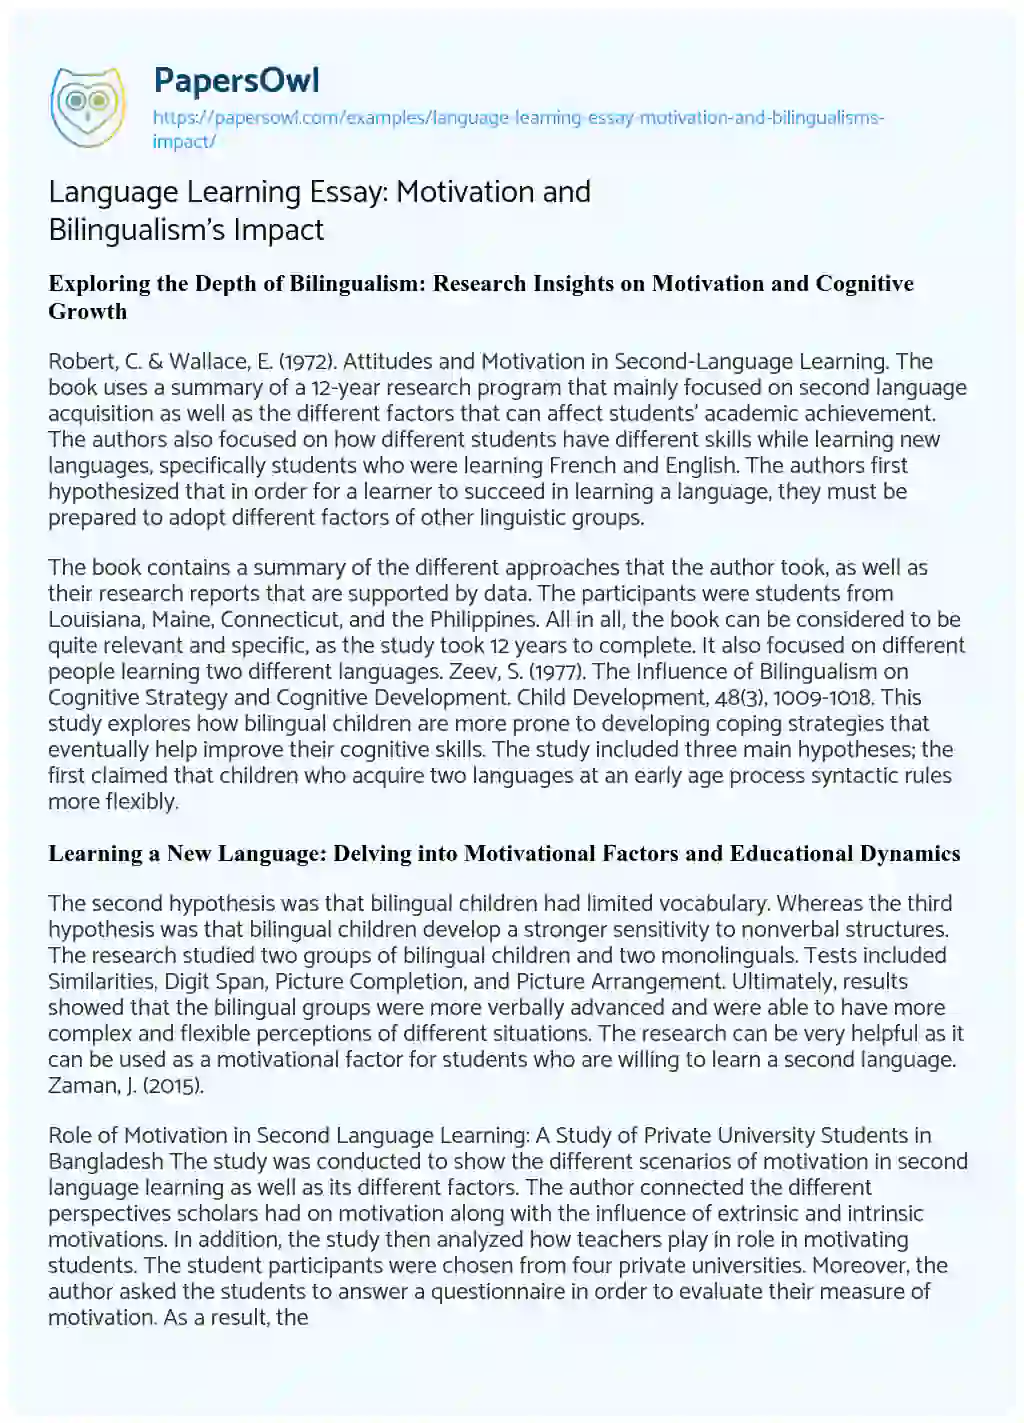 Essay on Language Learning Essay: Motivation and Bilingualism’s Impact